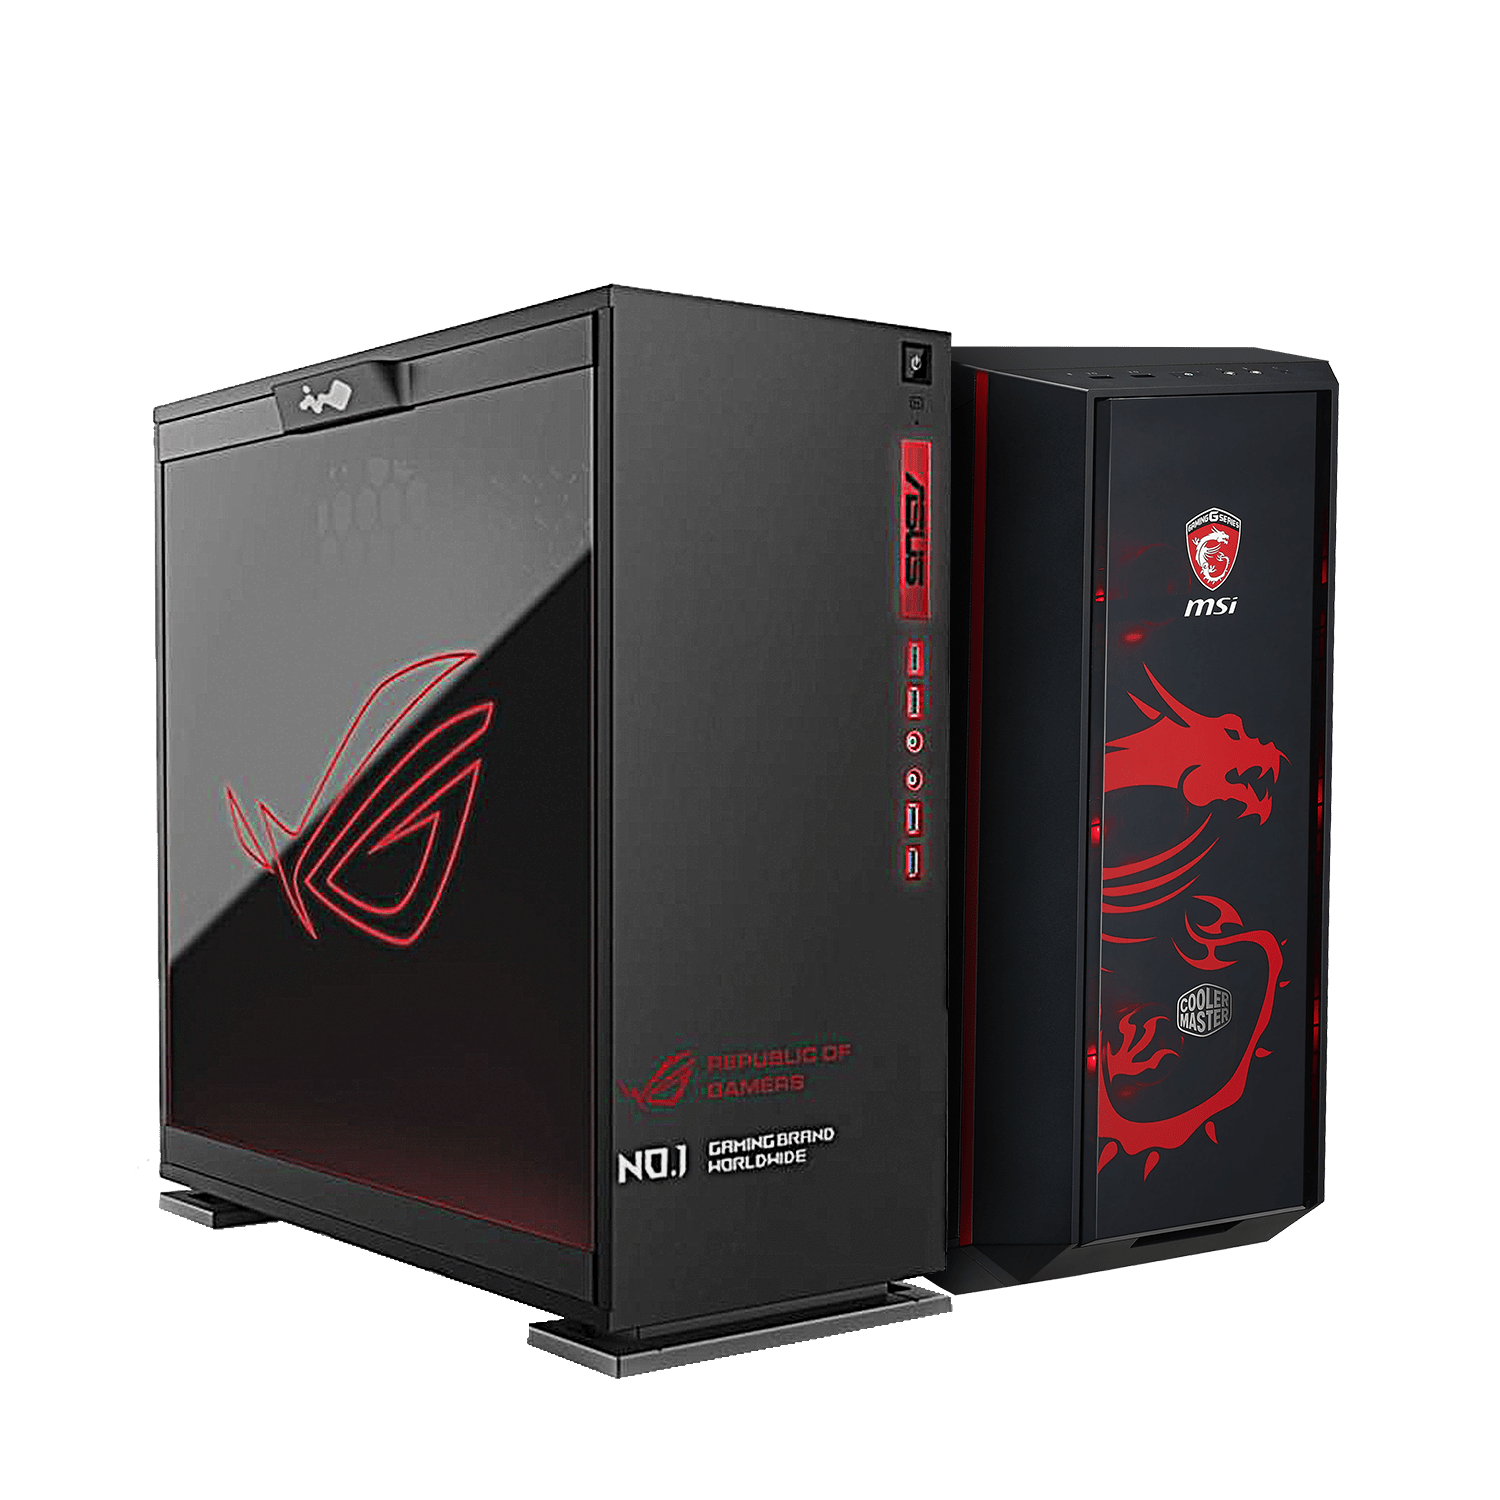 MasterBox 5 MSI Dragon Edition system build 08